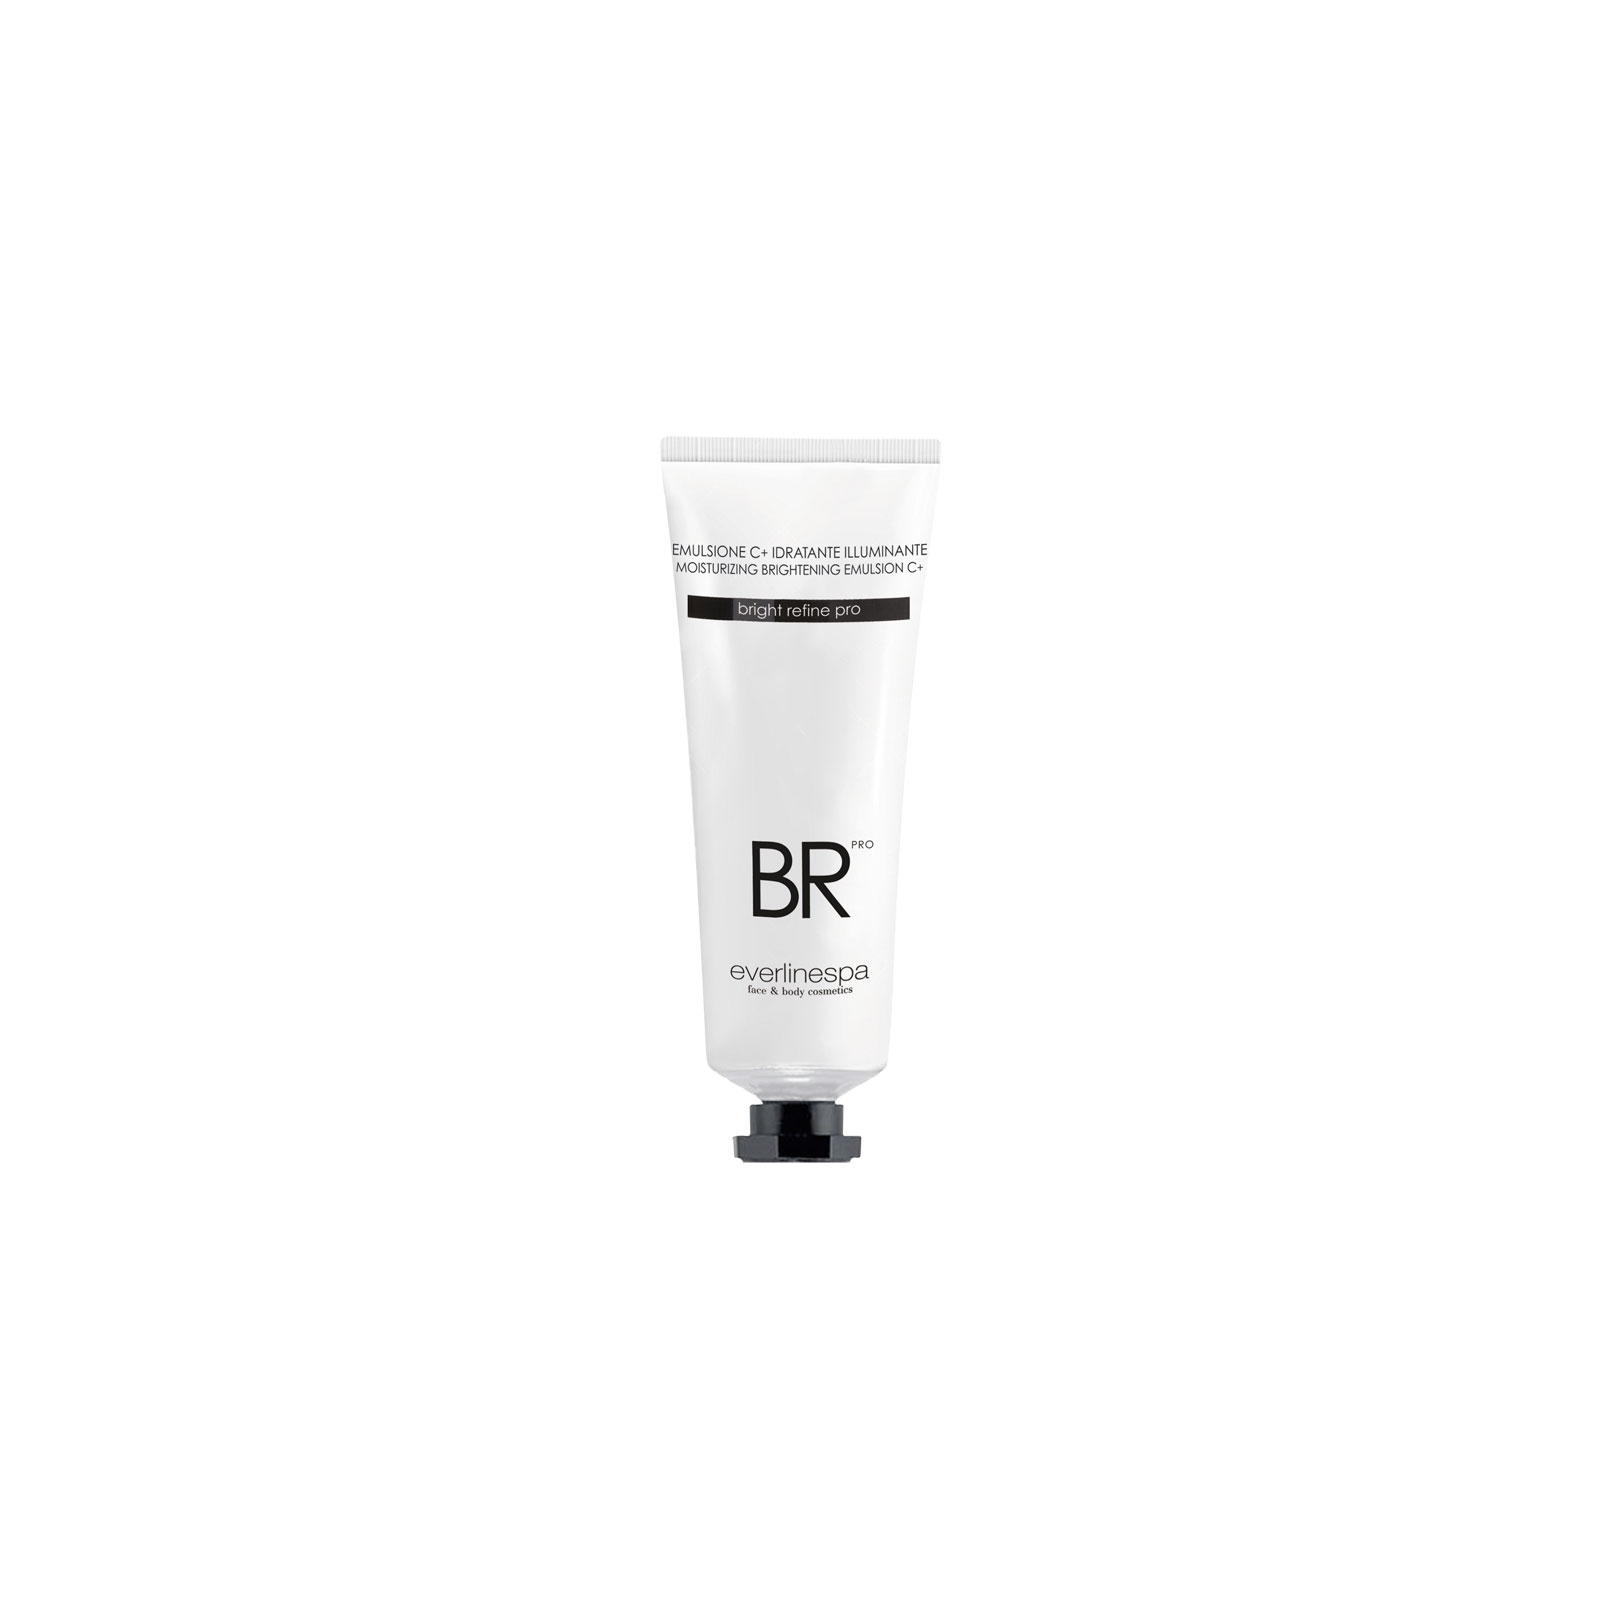 BR_emulsione-moisturizer-illuminante- 50 ml.jpg